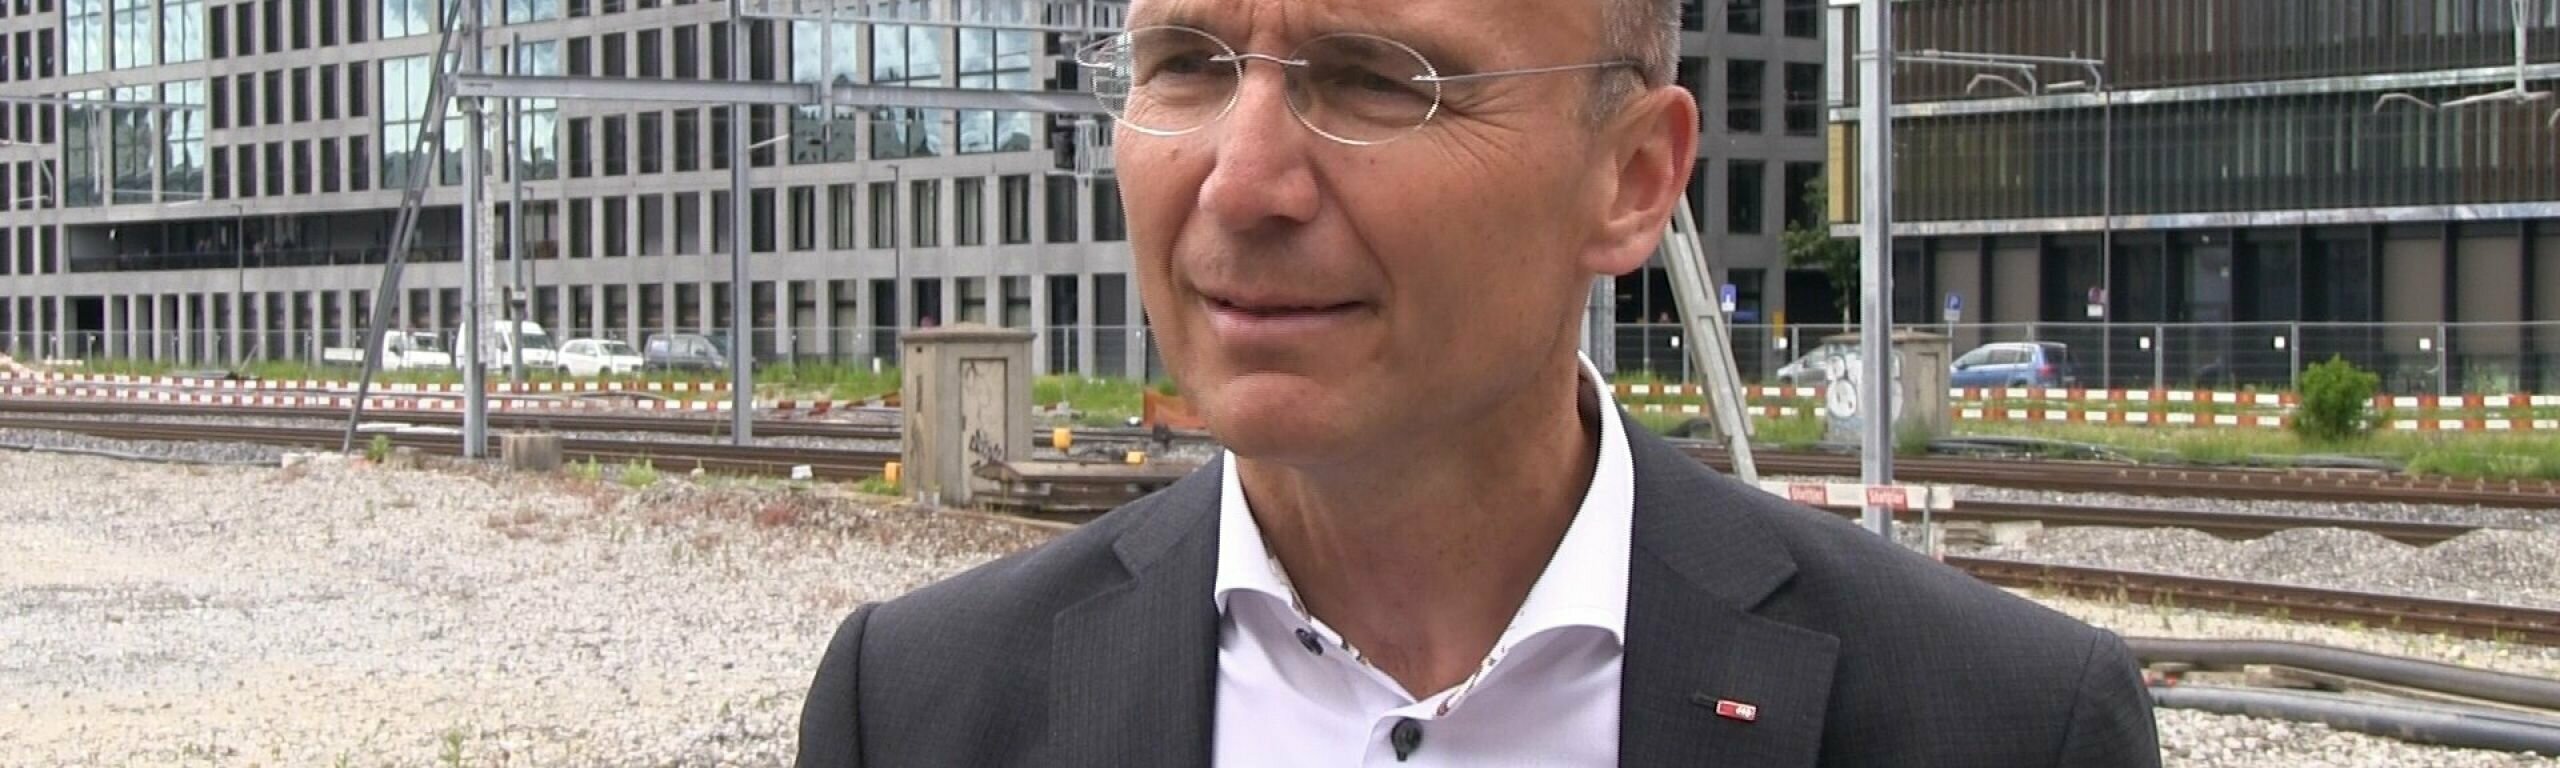 Jacques Boschung, Leiter SBB Infrastruktur